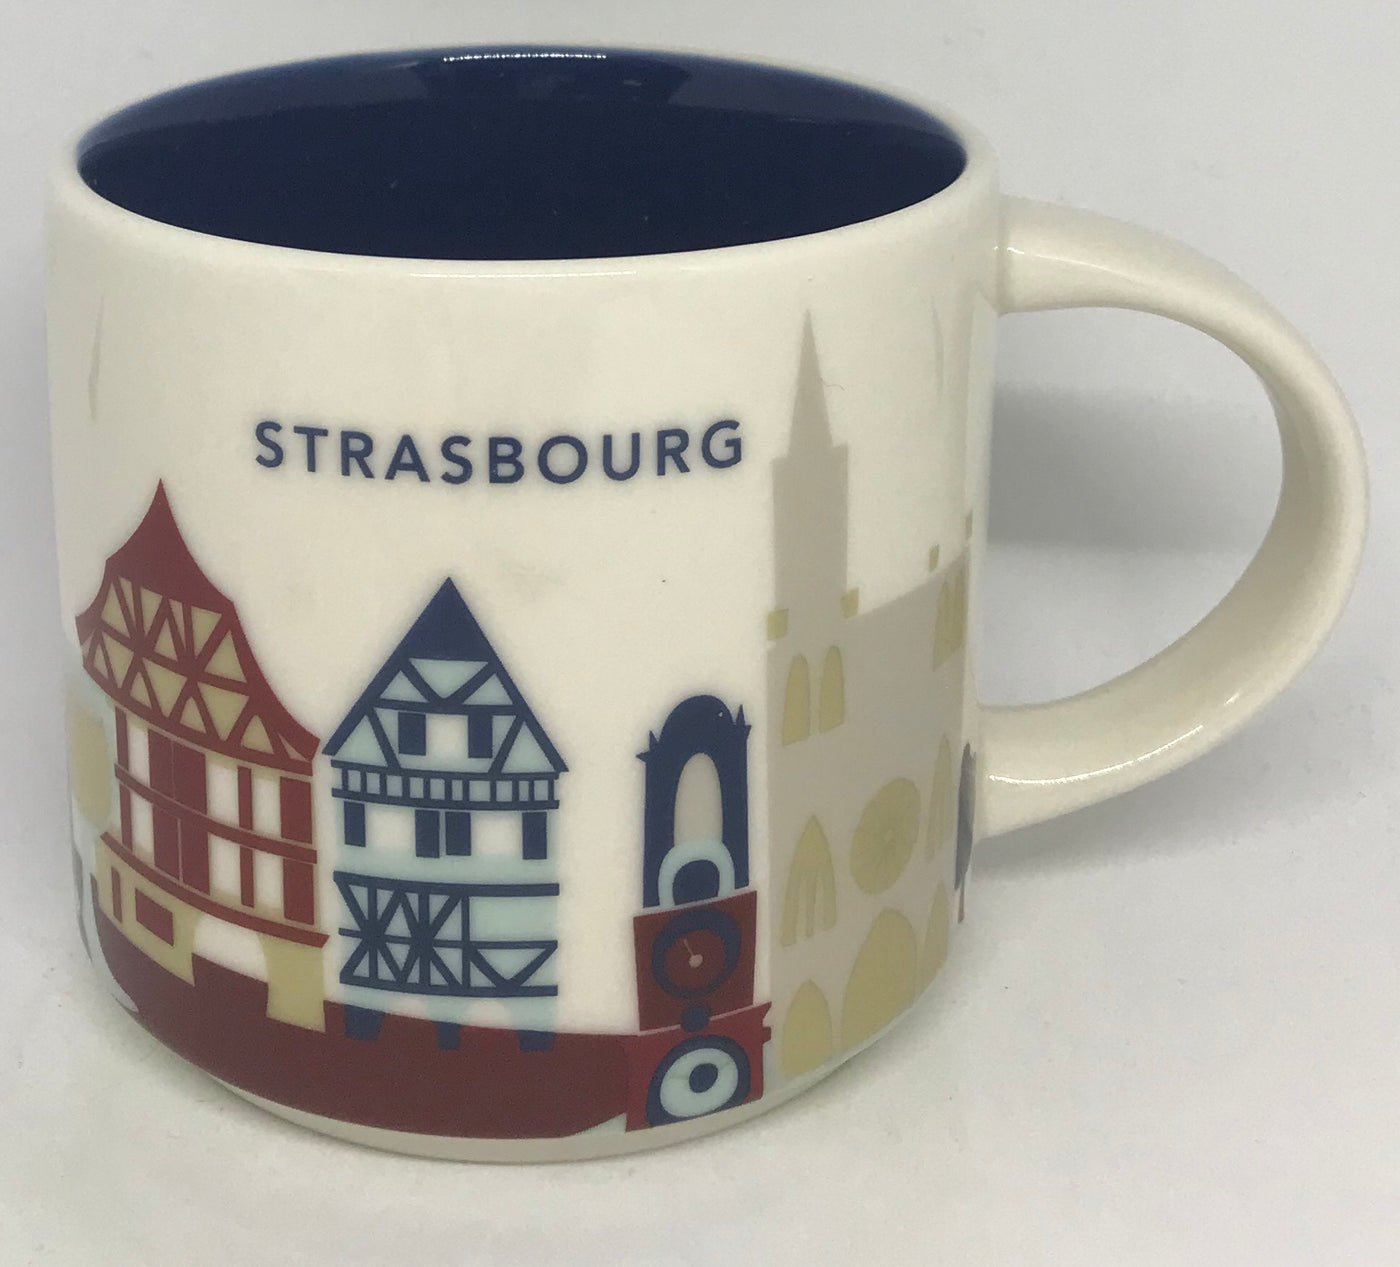 Starbucks You Are Here Strasbourg France Ceramic Coffee Mug New with Box